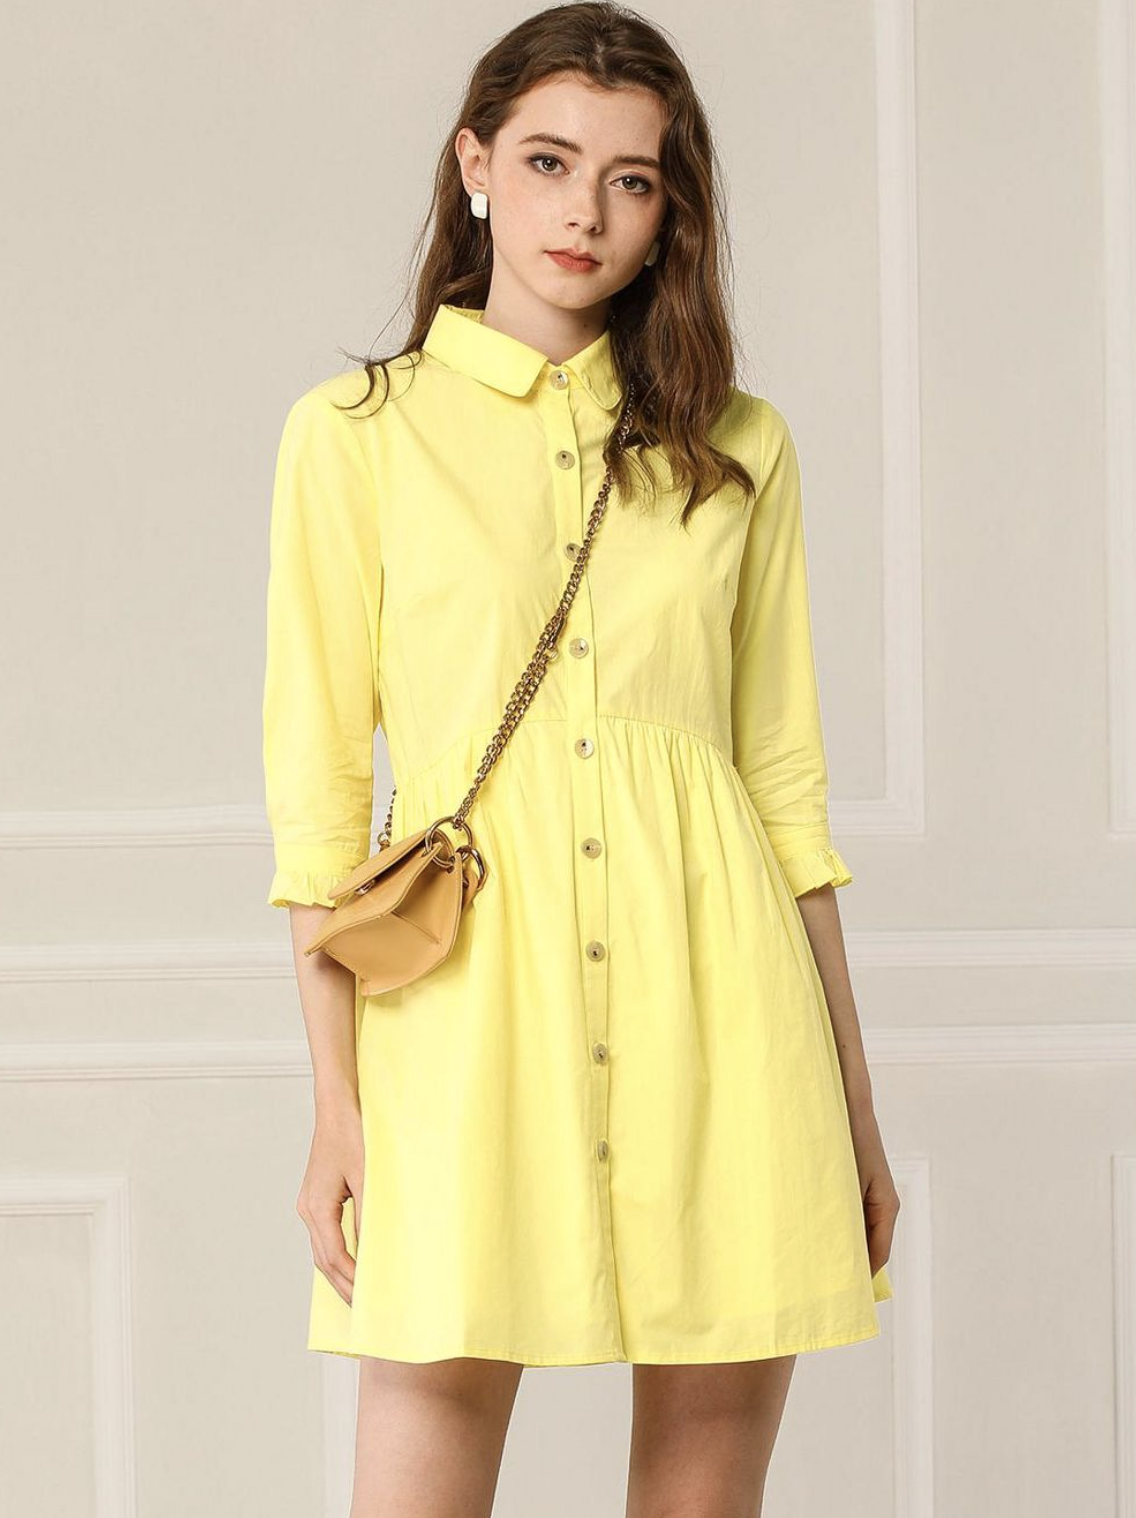 model wearing the dress in yellow